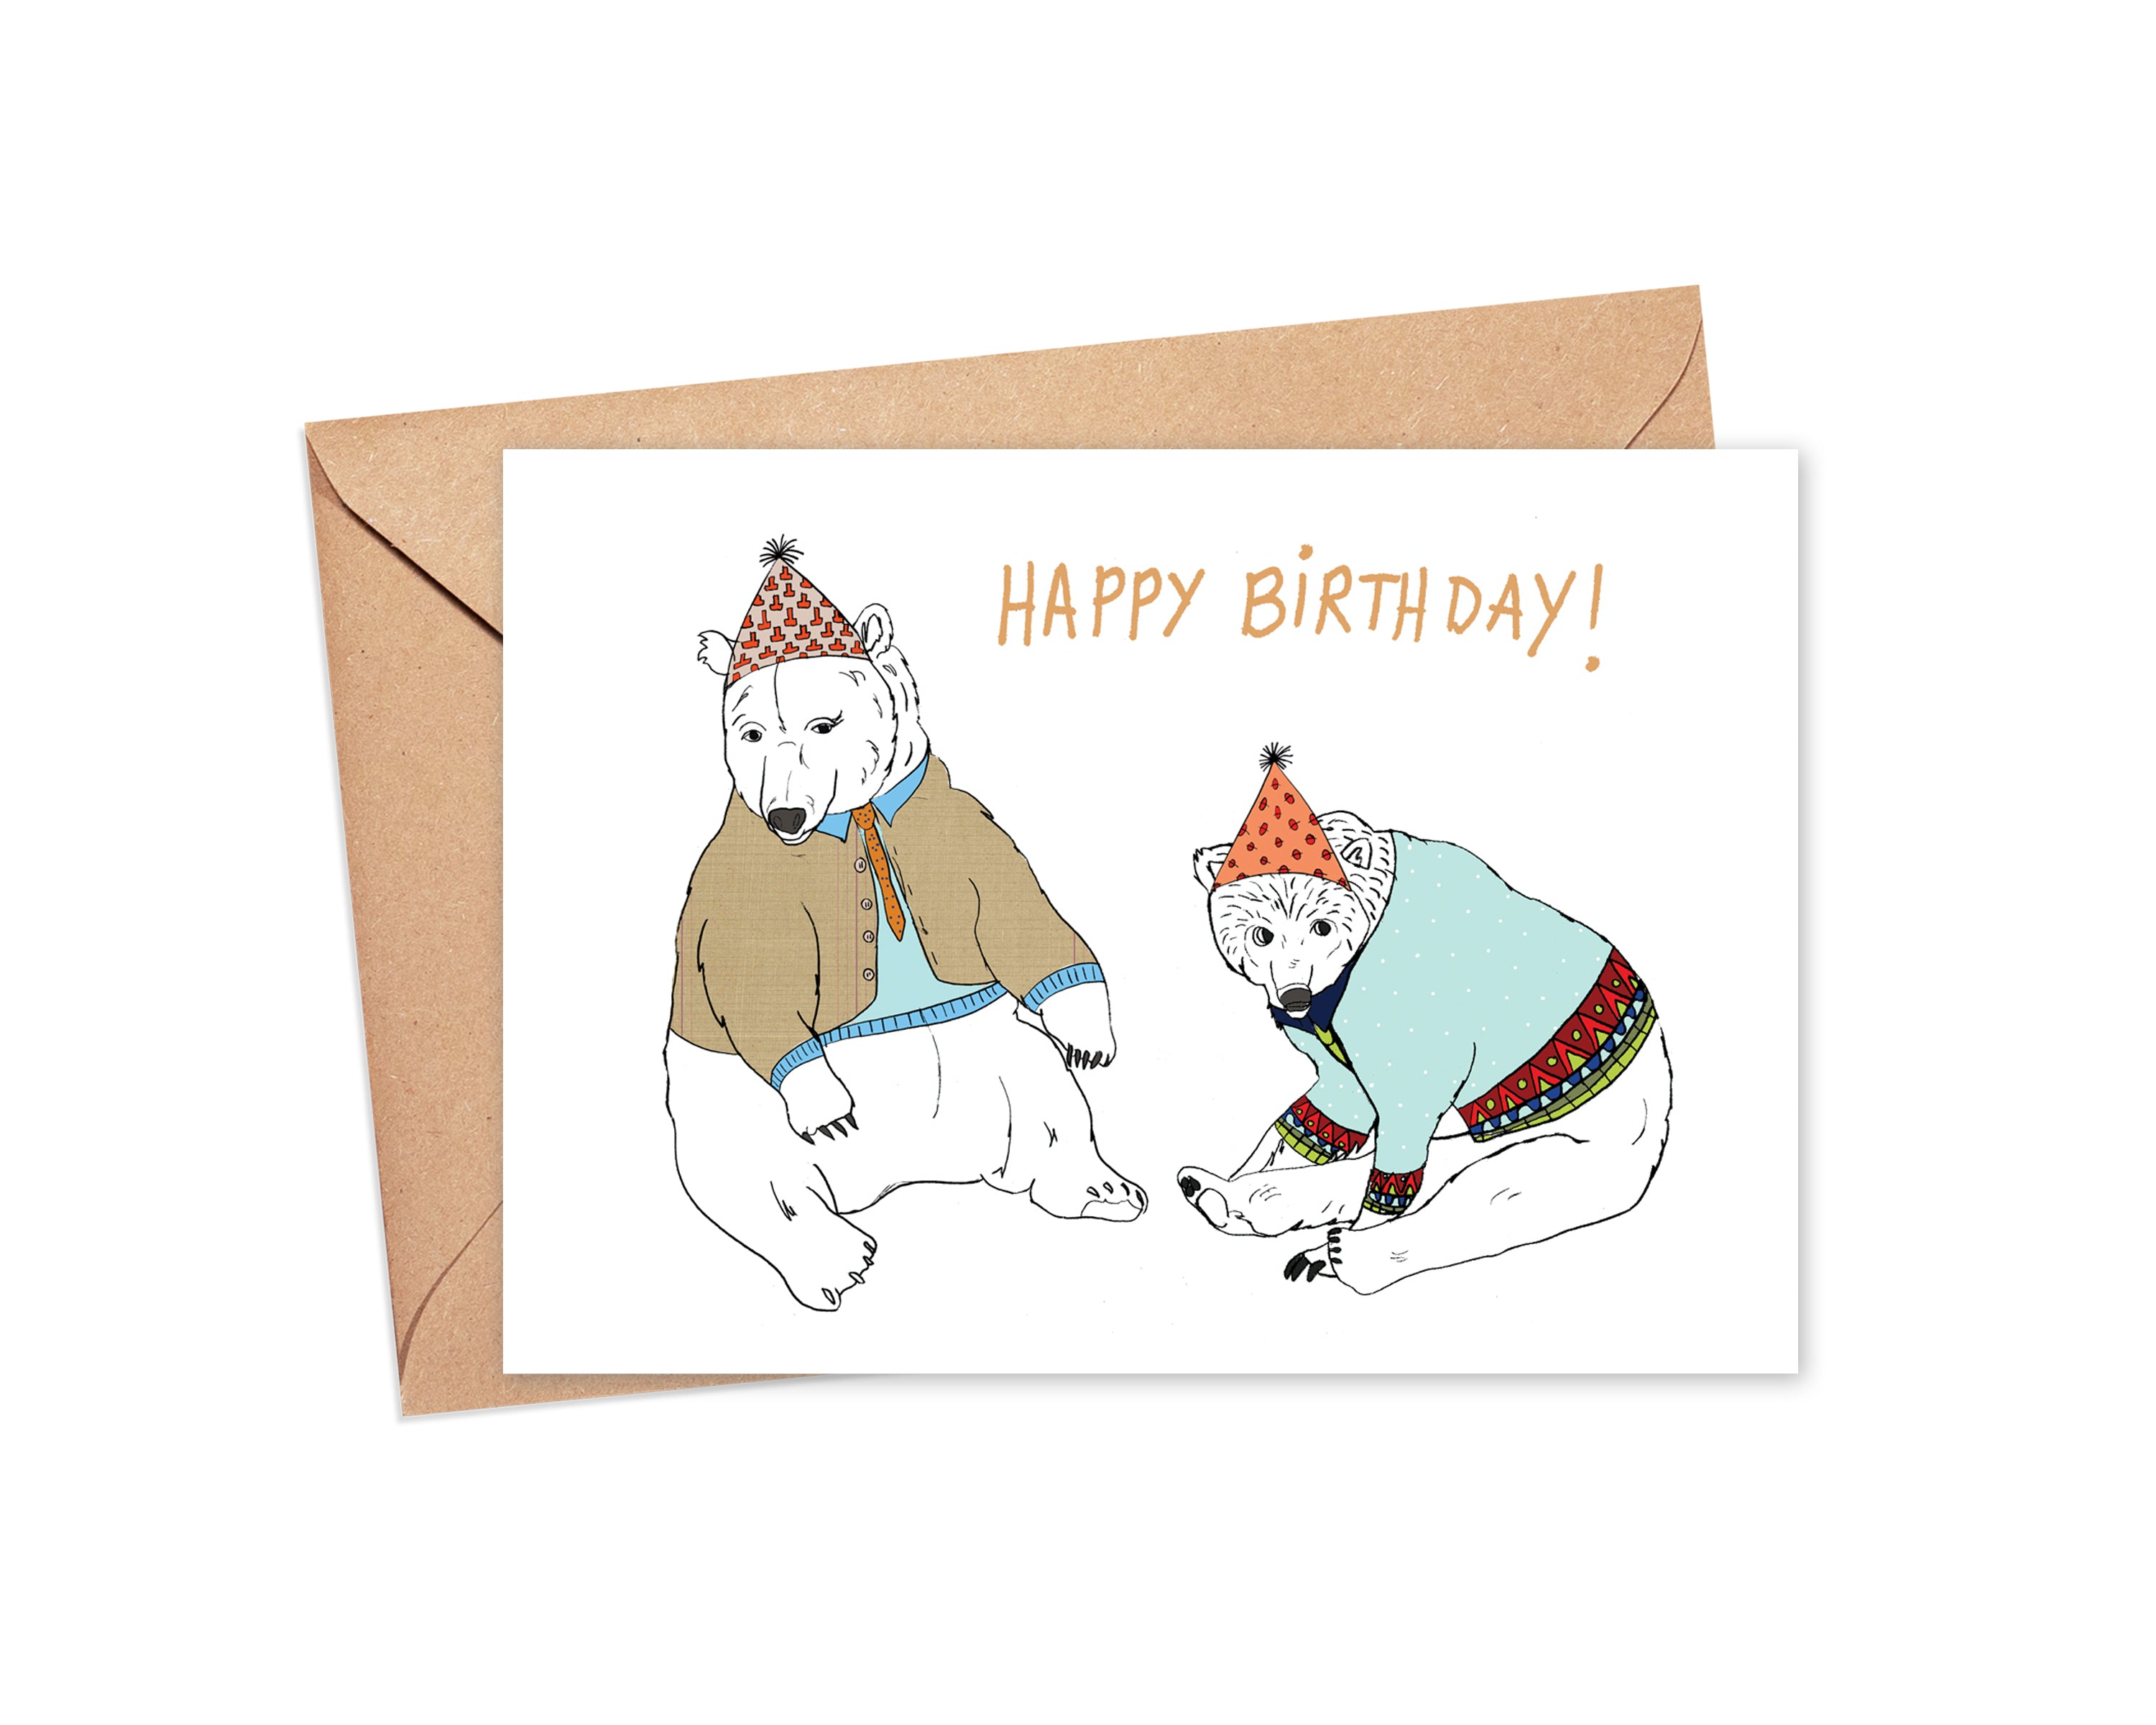 "Sending you big bear hugs on your birthday." Blank Card